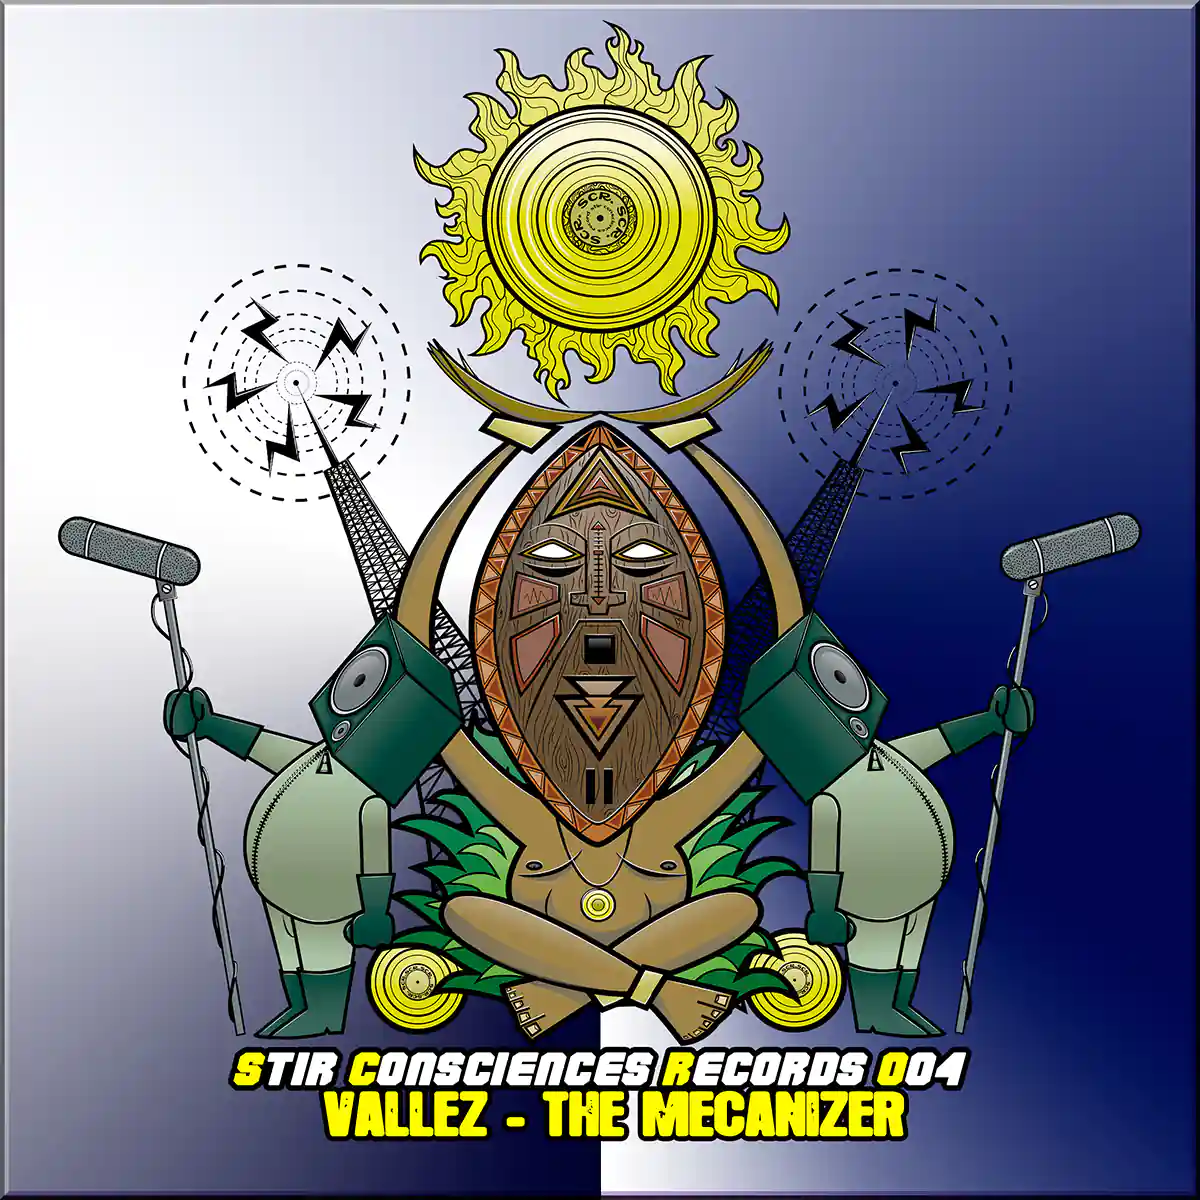 Vallez - The Mecanizer - Stir Conciences Records 004